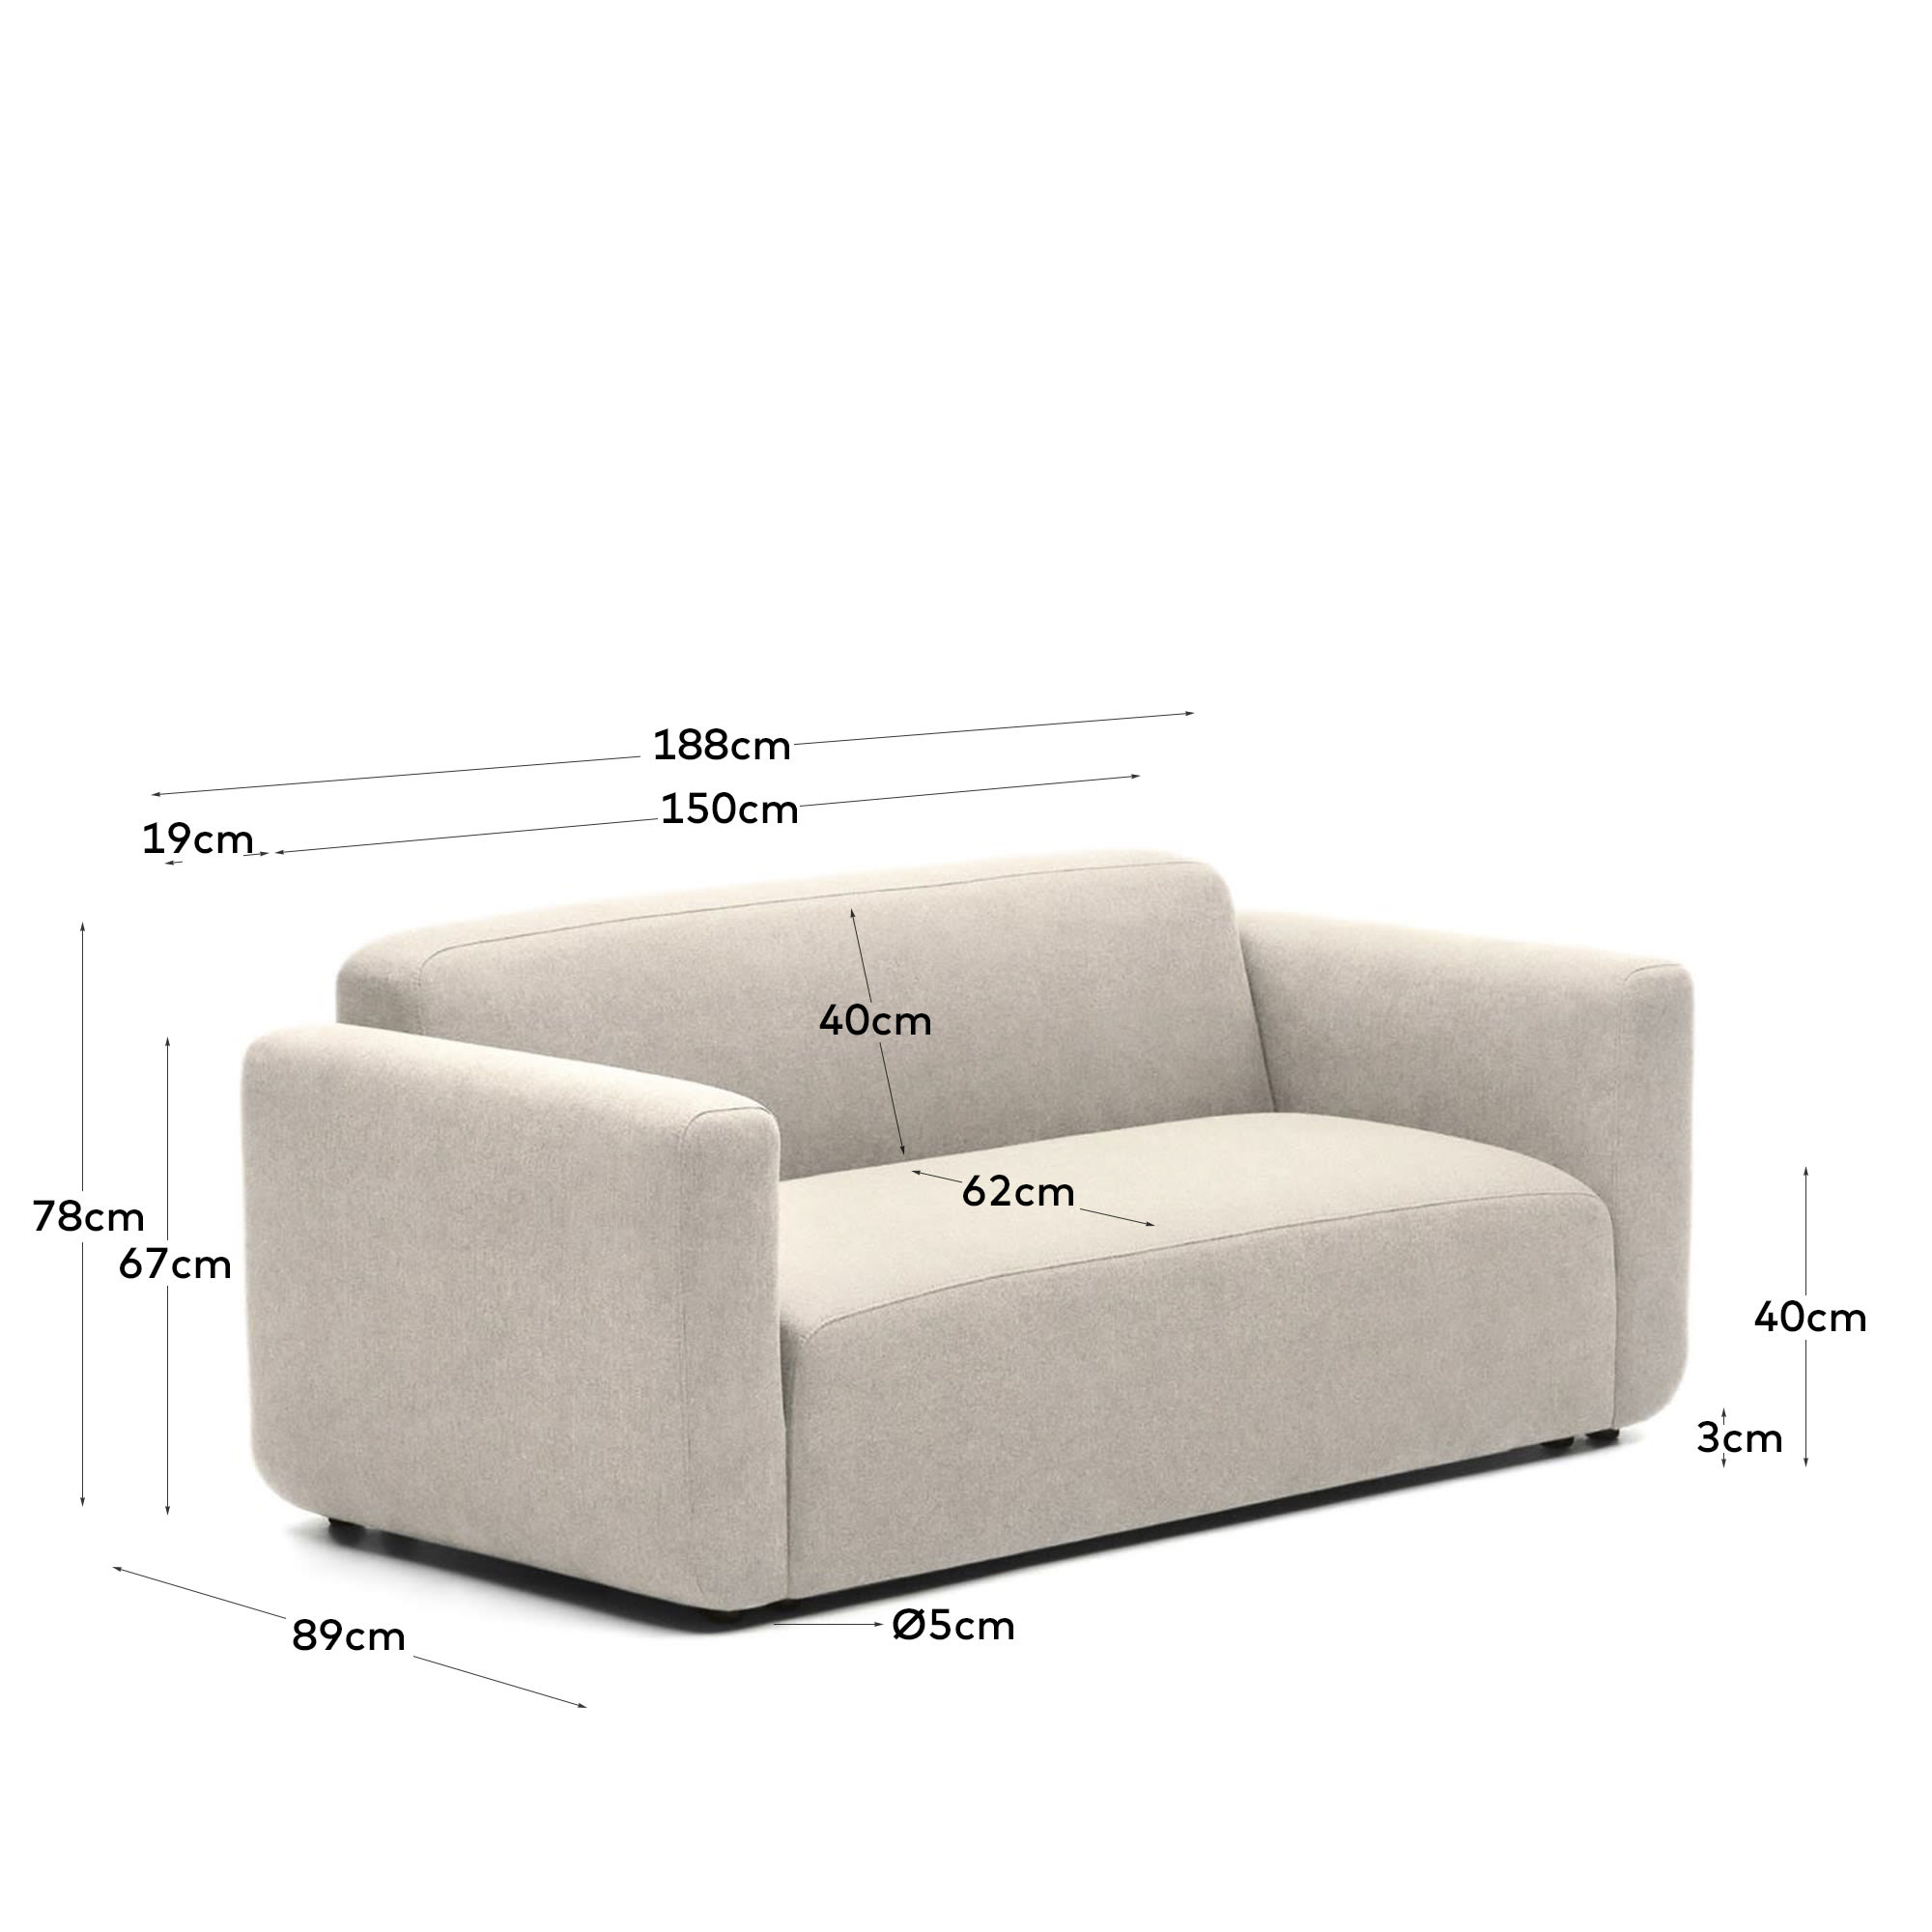 Neom 2 seater modular sofa in beige, 188 cm - sizes